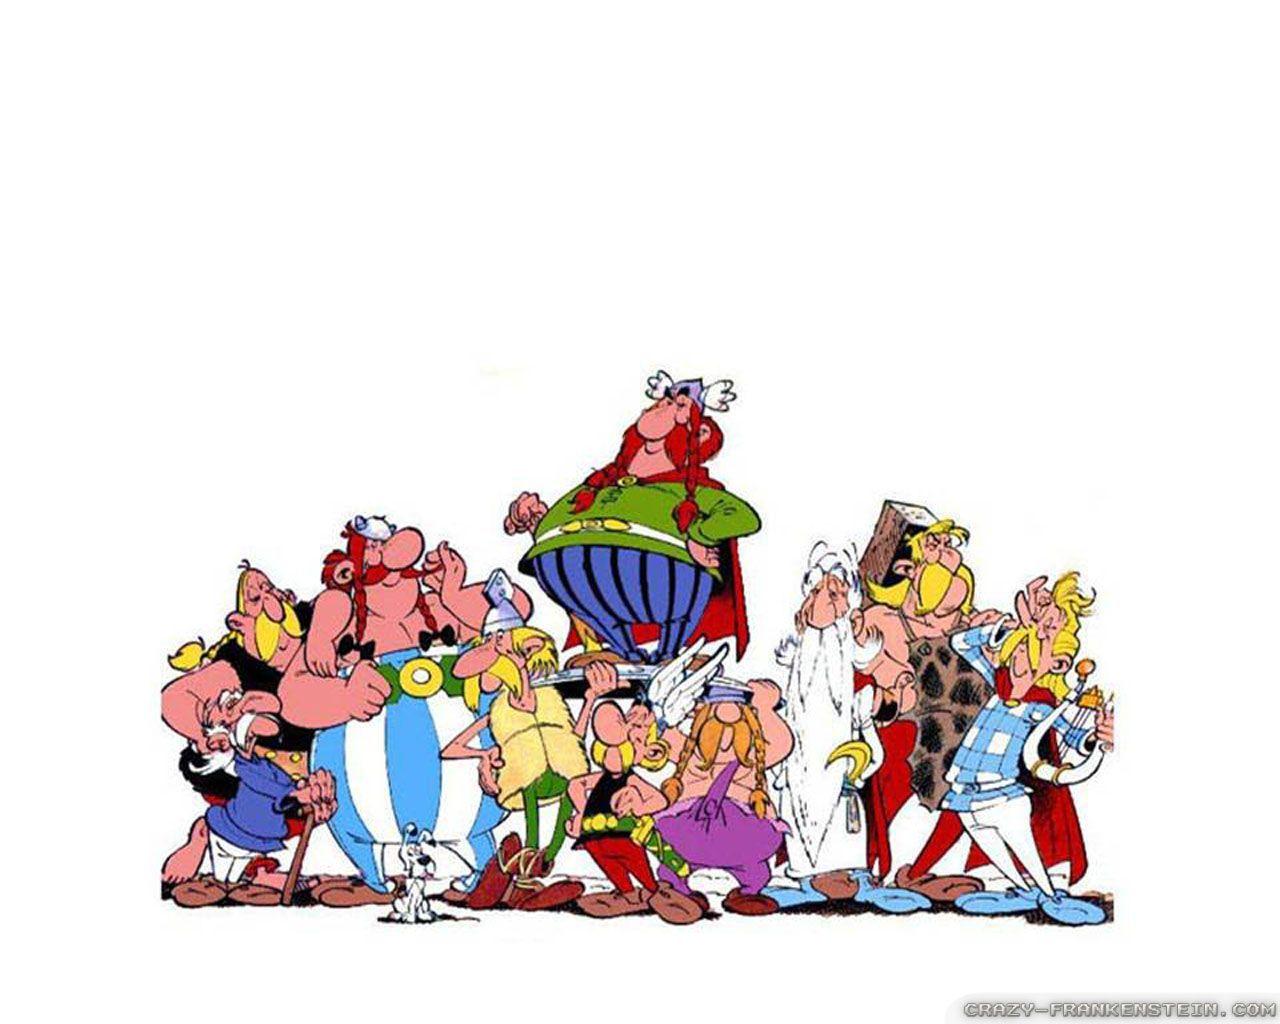 Asterix and Obelix wallpaper 2 Frankenstein. Free